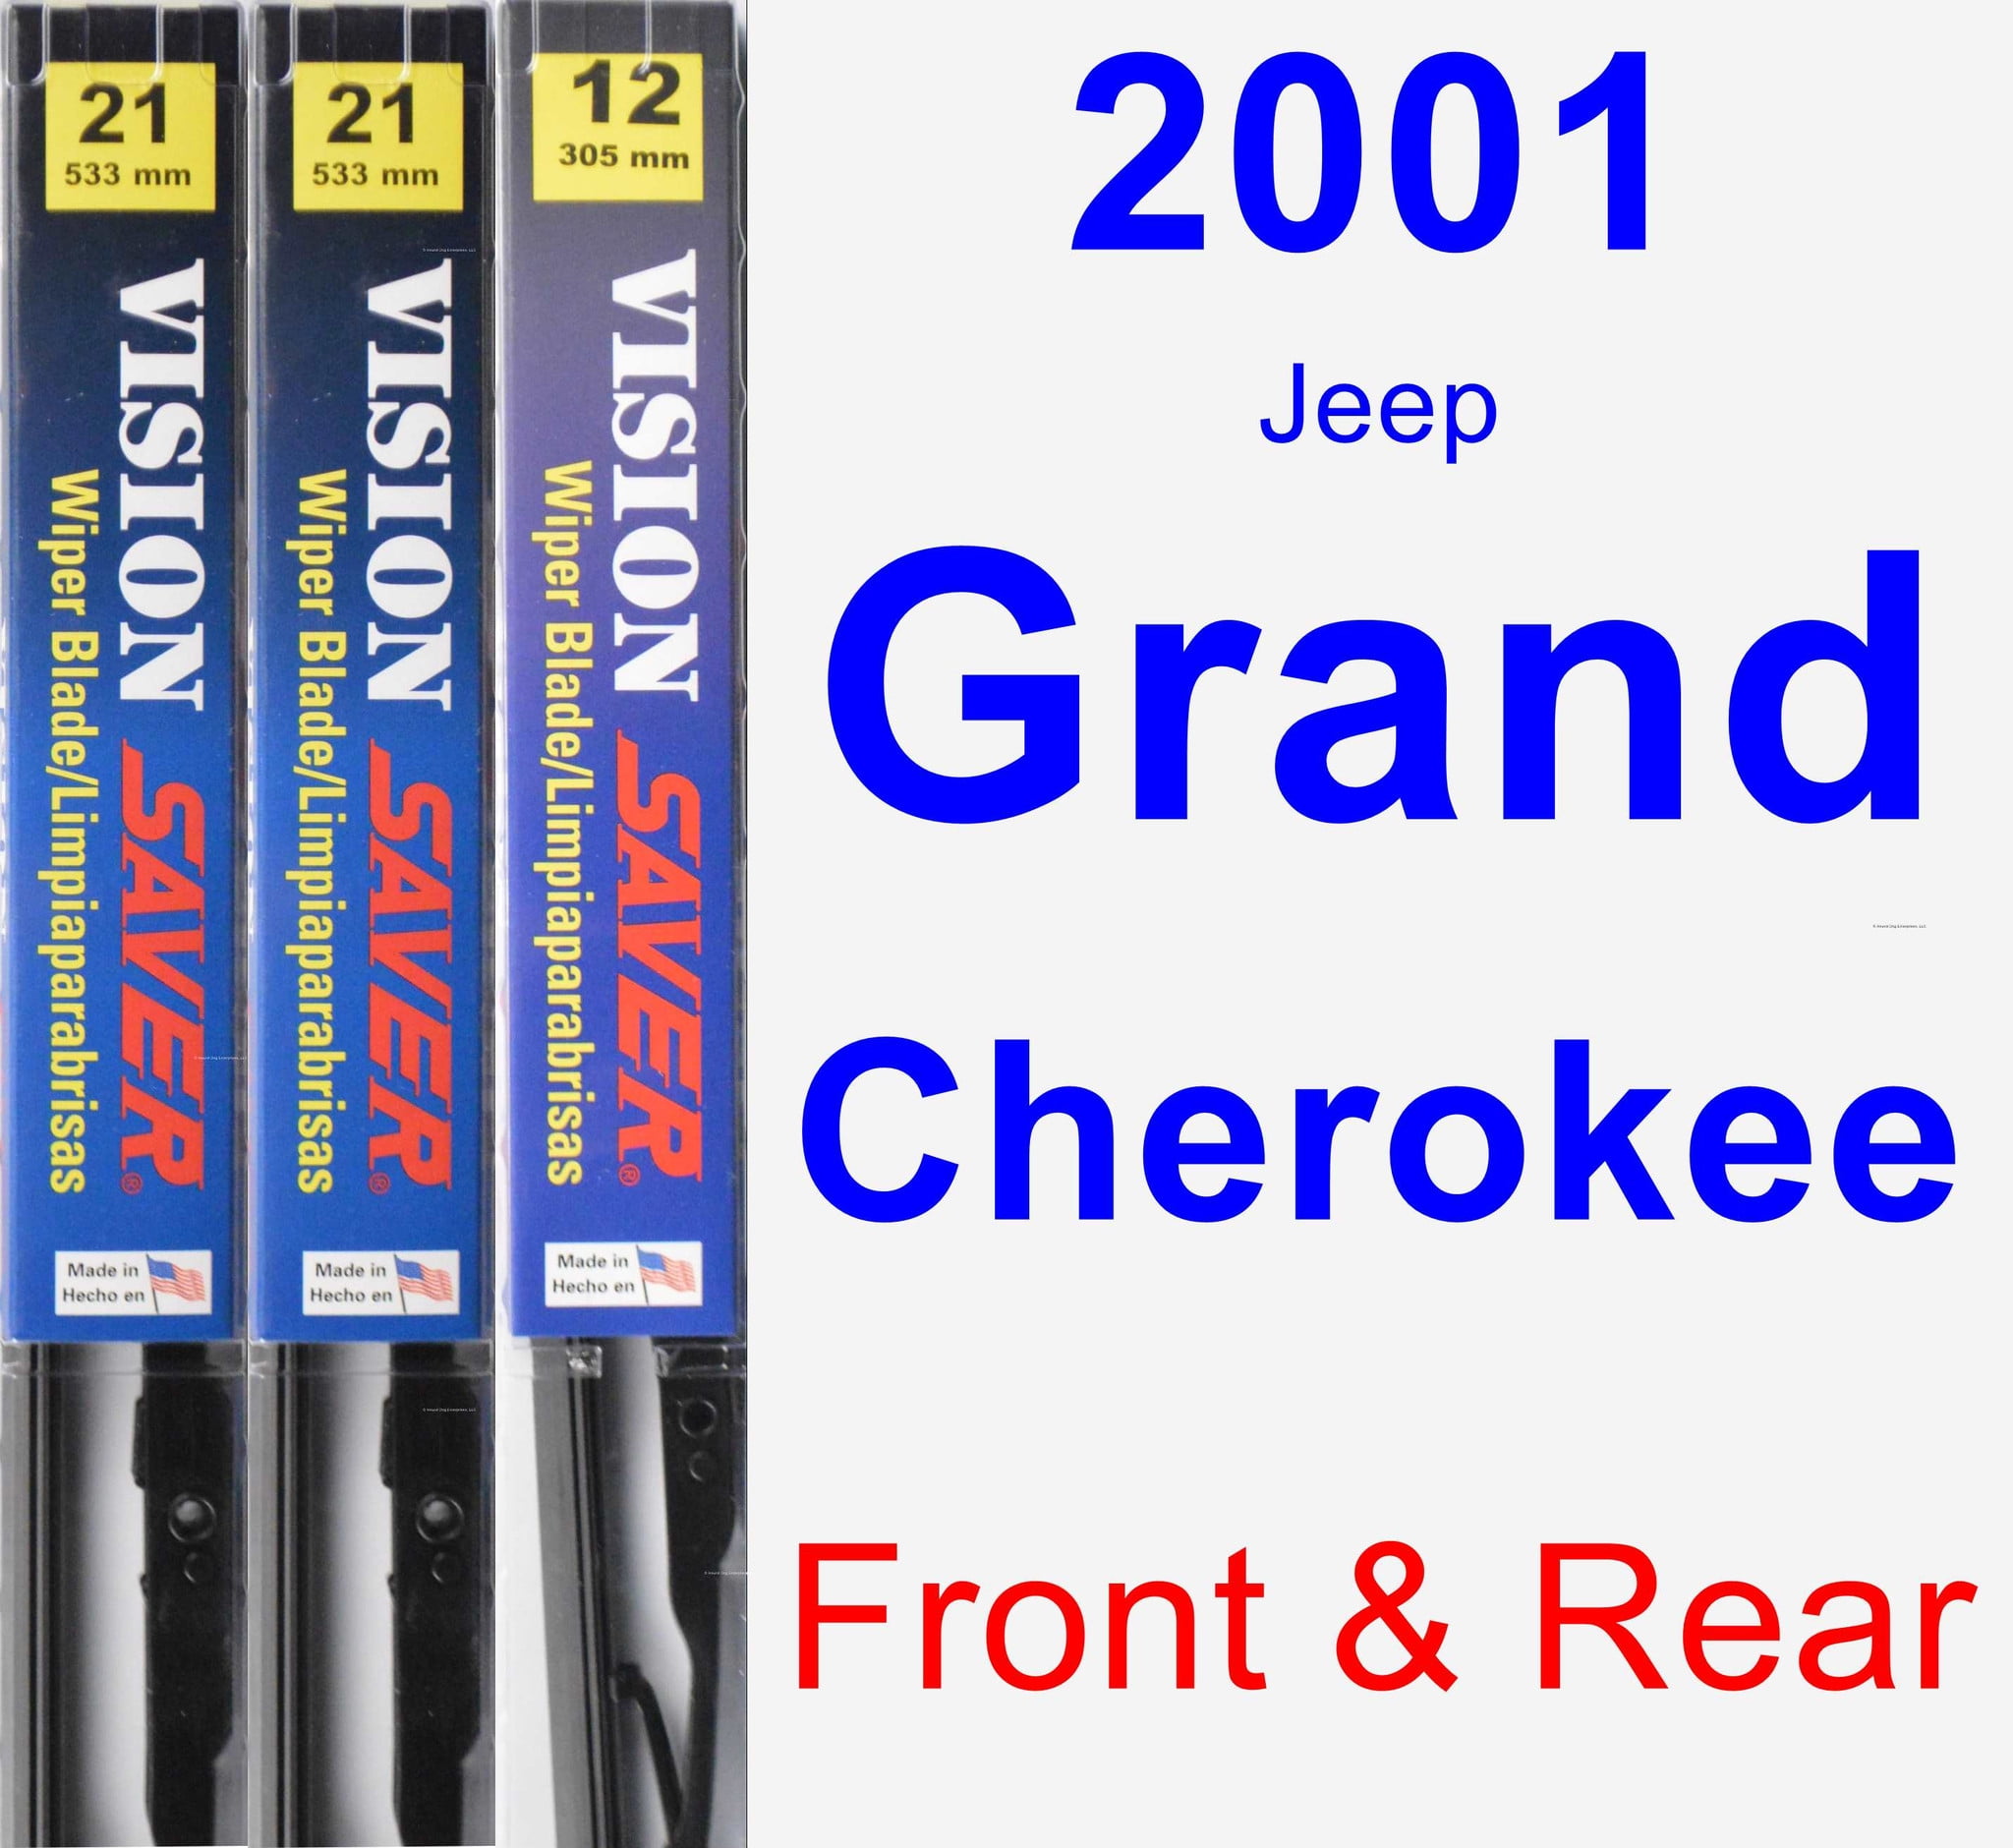 2001 Jeep Grand Cherokee Wiper Blade Set/Kit (Front & Rear) (3 Blades) - Vision Saver - Walmart 2001 Jeep Cherokee Rear Wiper Blade Size